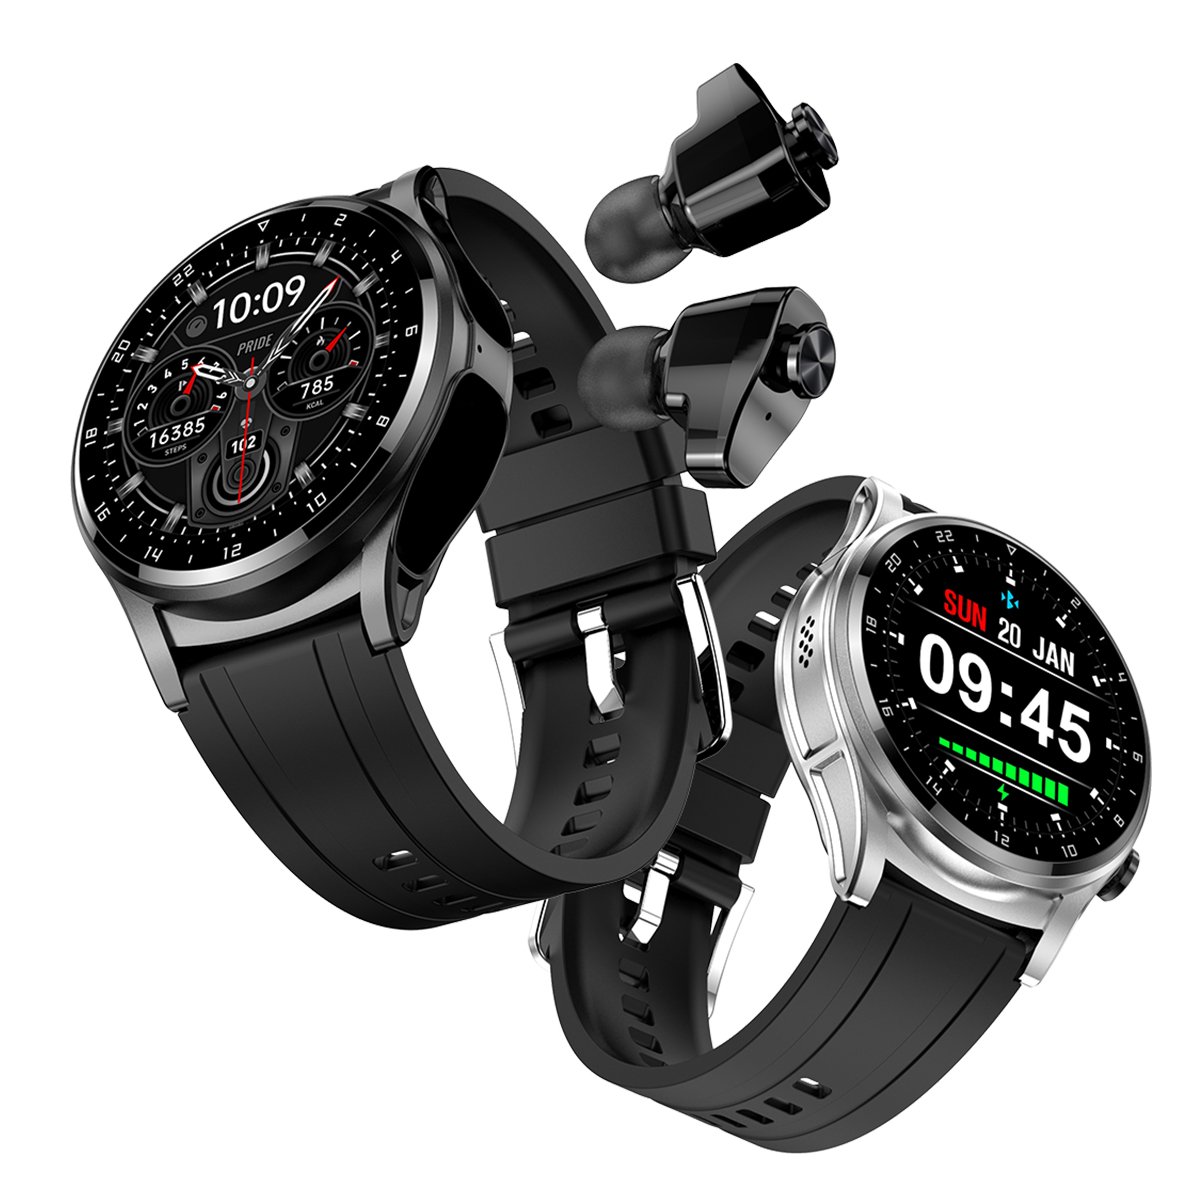 New GT66 smart watch TWS Bluetooth headset 2 in1 multi sport mode heart rate sleep monitoring